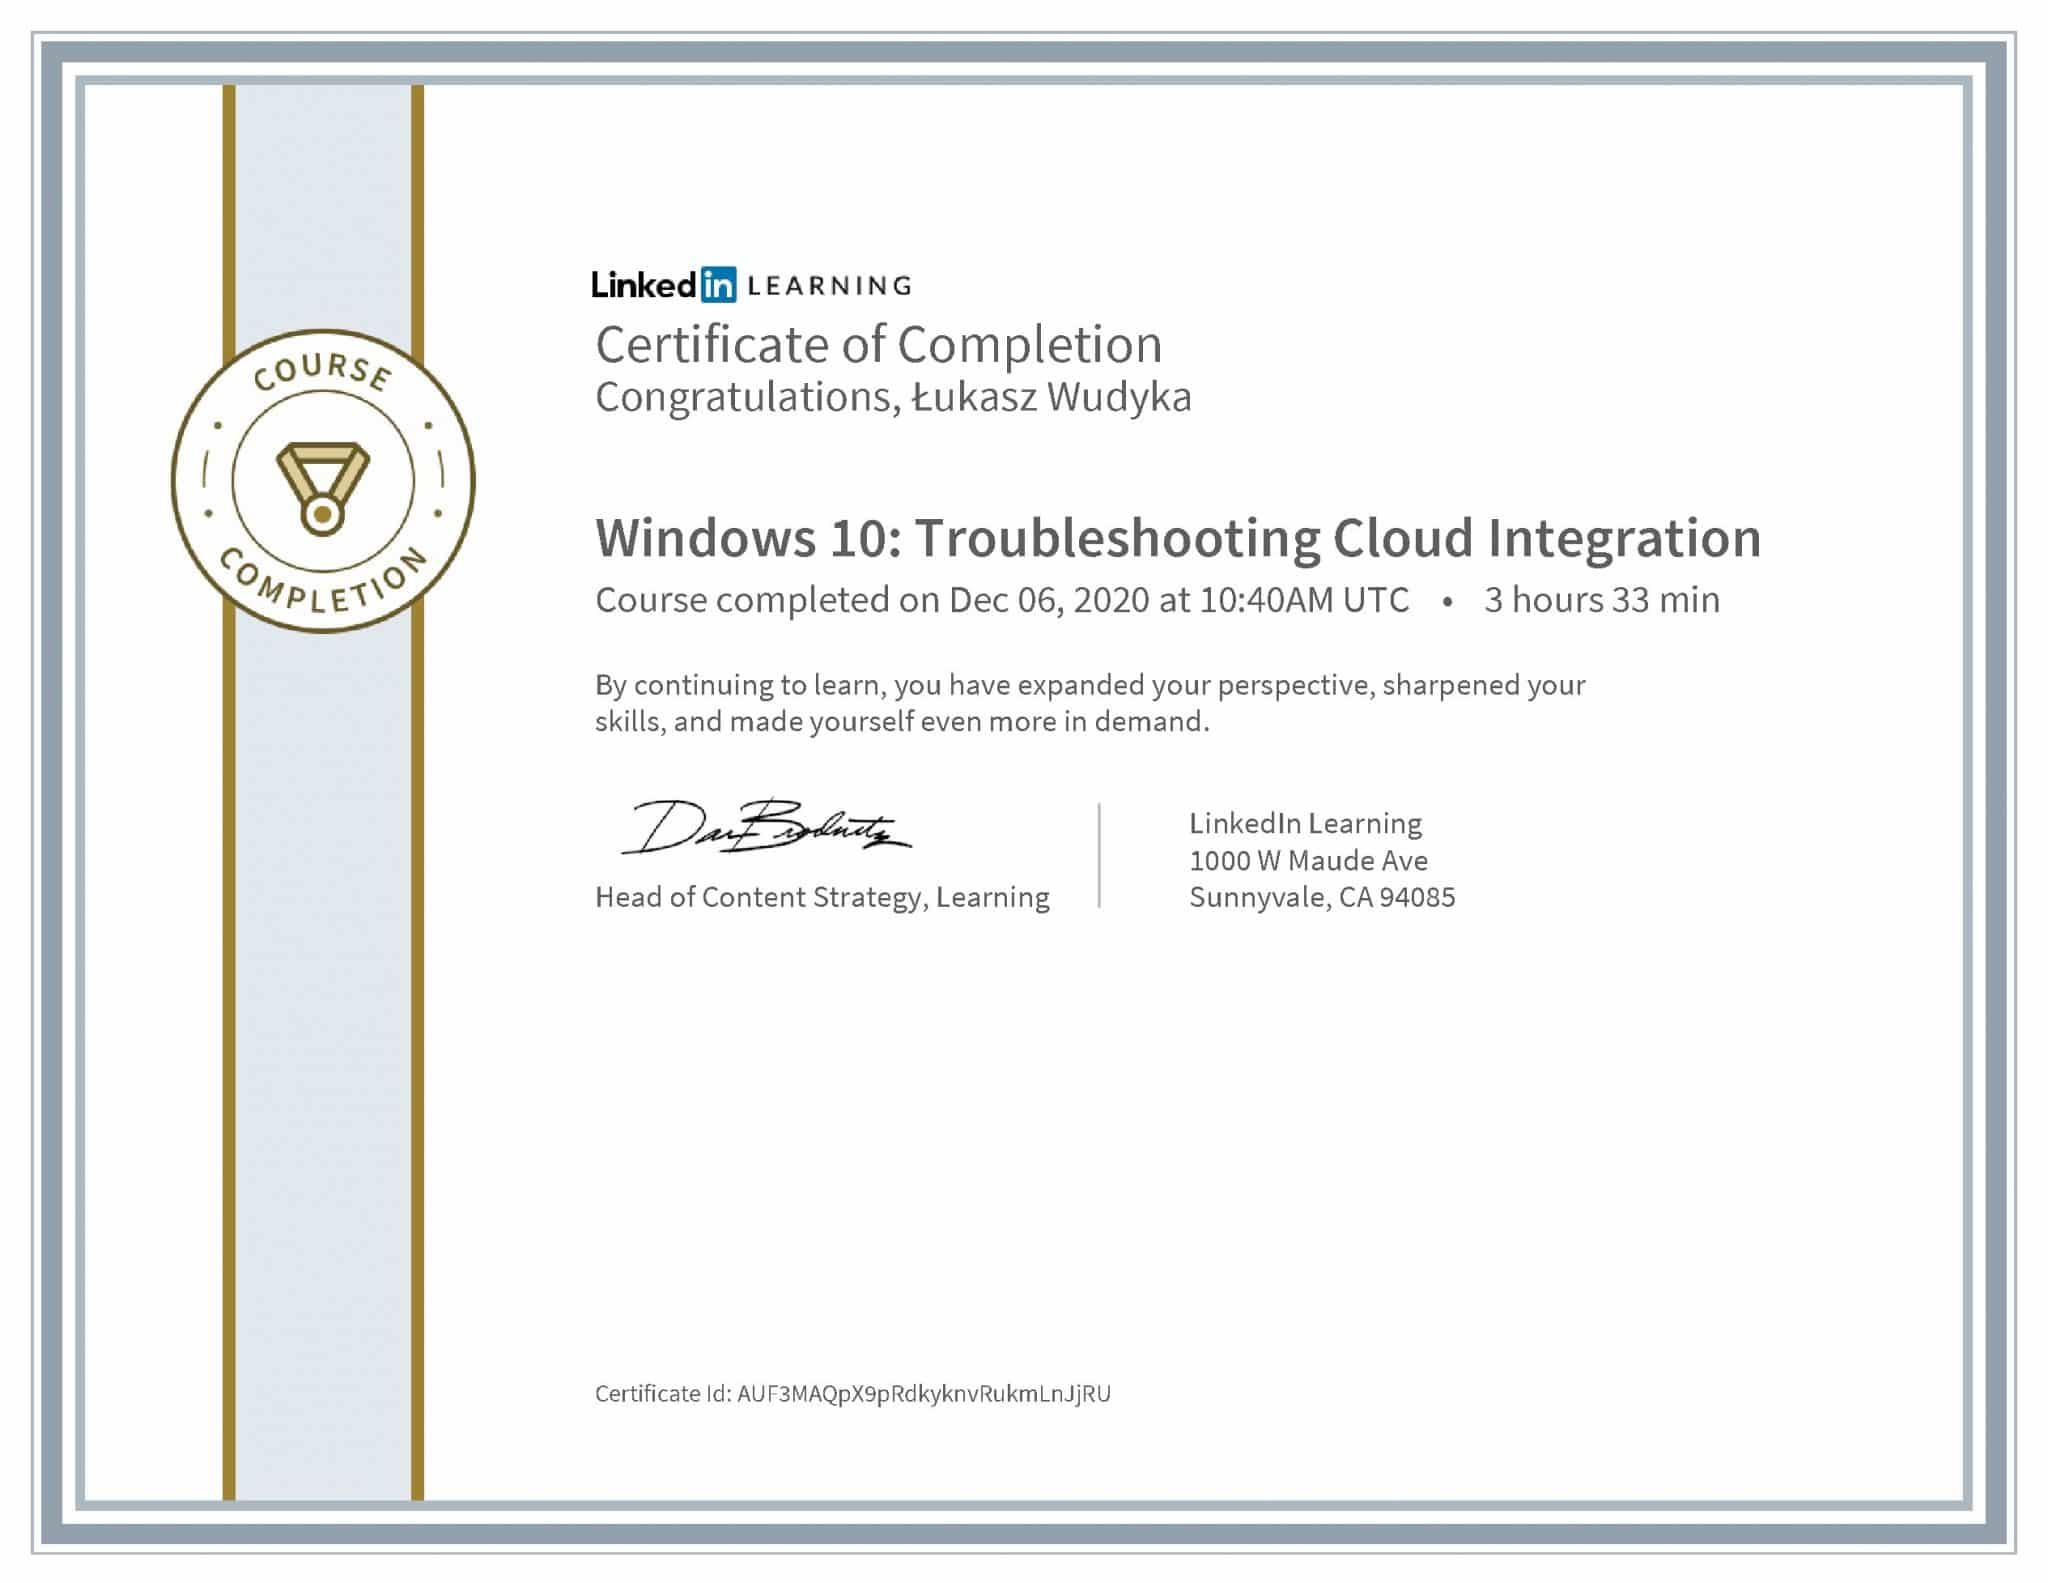 Łukasz Wudyka certyfikat LinkedIn Windows 10: Troubleshooting Cloud Integration